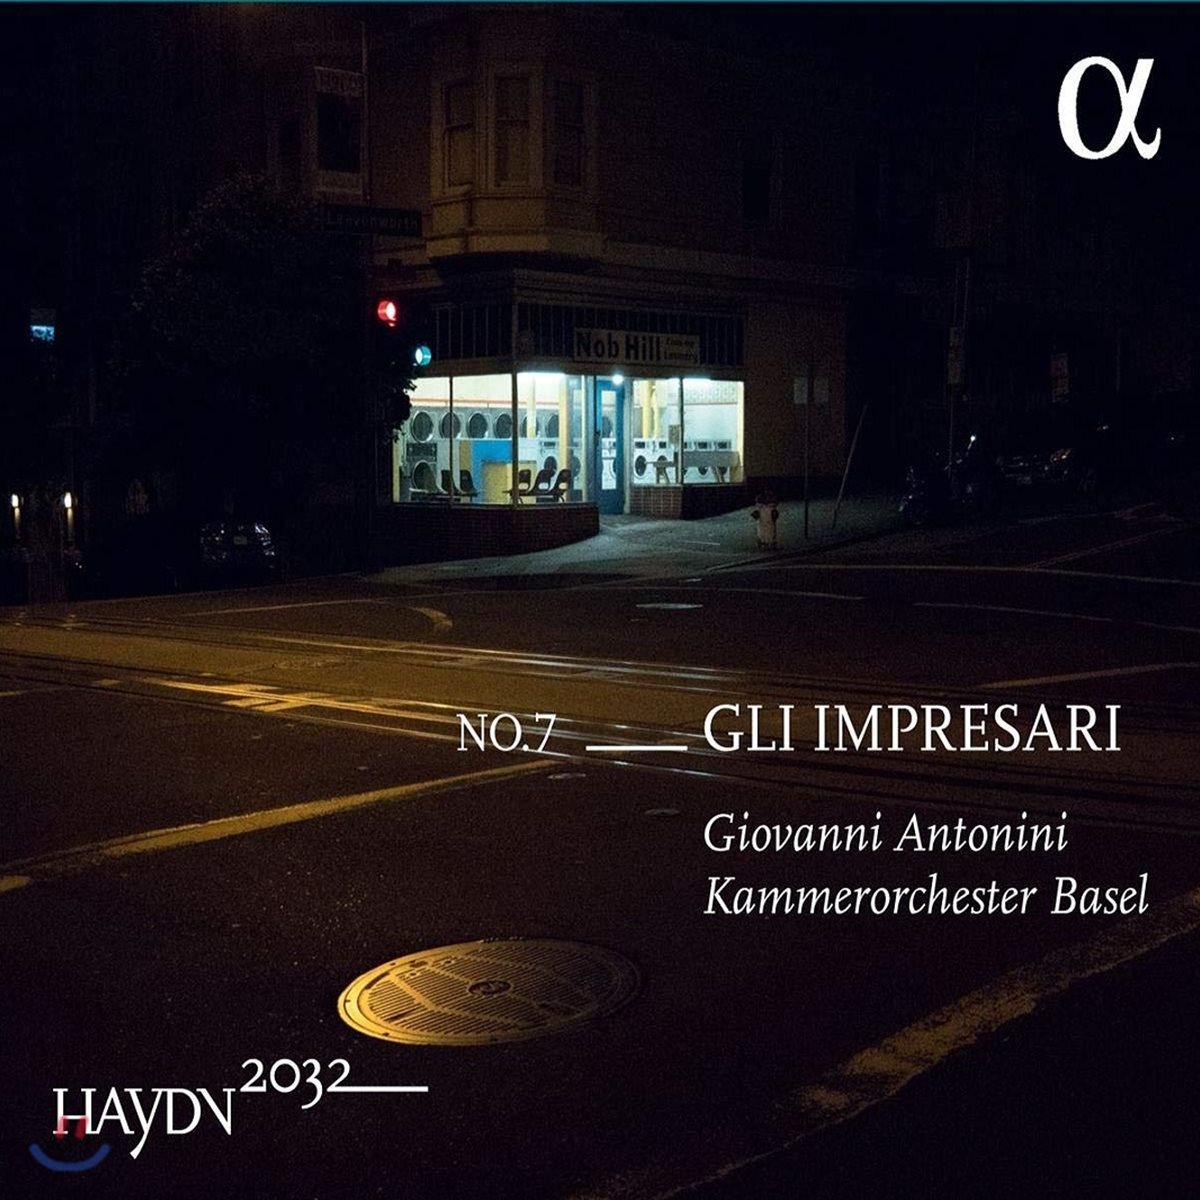 Giovanni Antonini 하이든 2032 프로젝트 7집 (Haydn 2032 Vol. 7 - Gli Impresari)